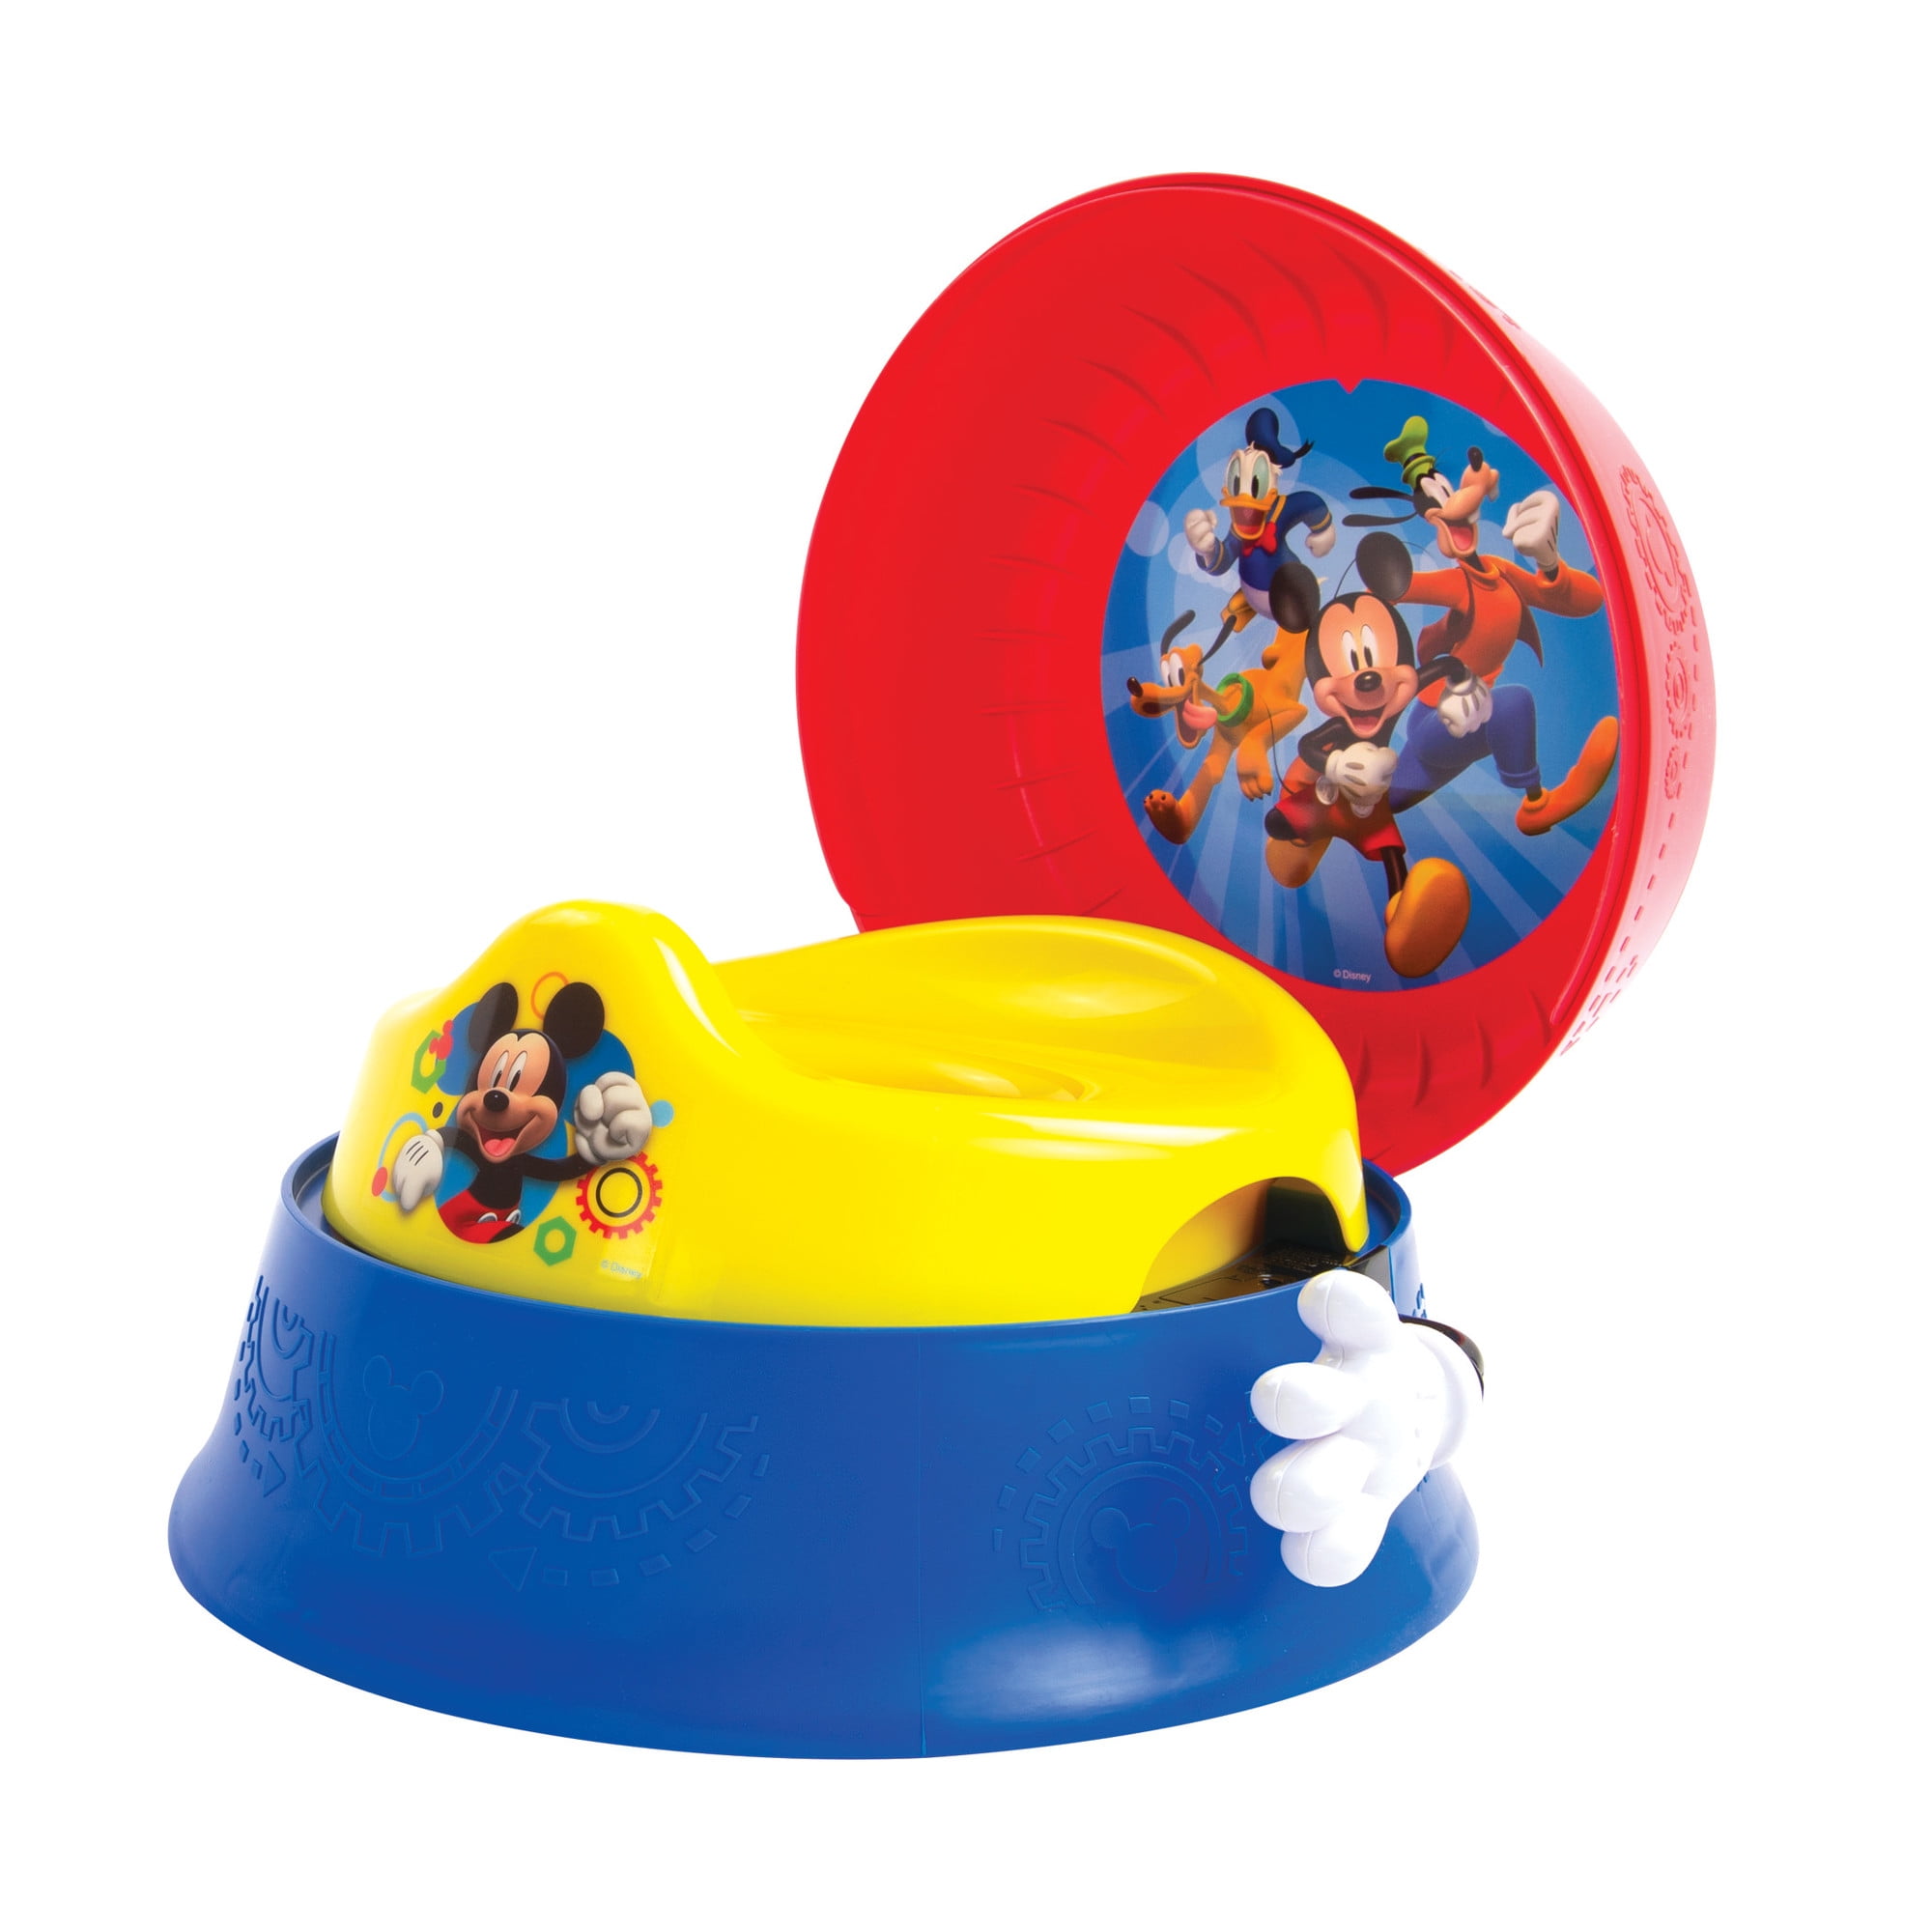 Disney Mickey Mouse 3 In 1 Potty Training Toilet Toddler Toilet Training Set Step Stool Walmart Com Walmart Com